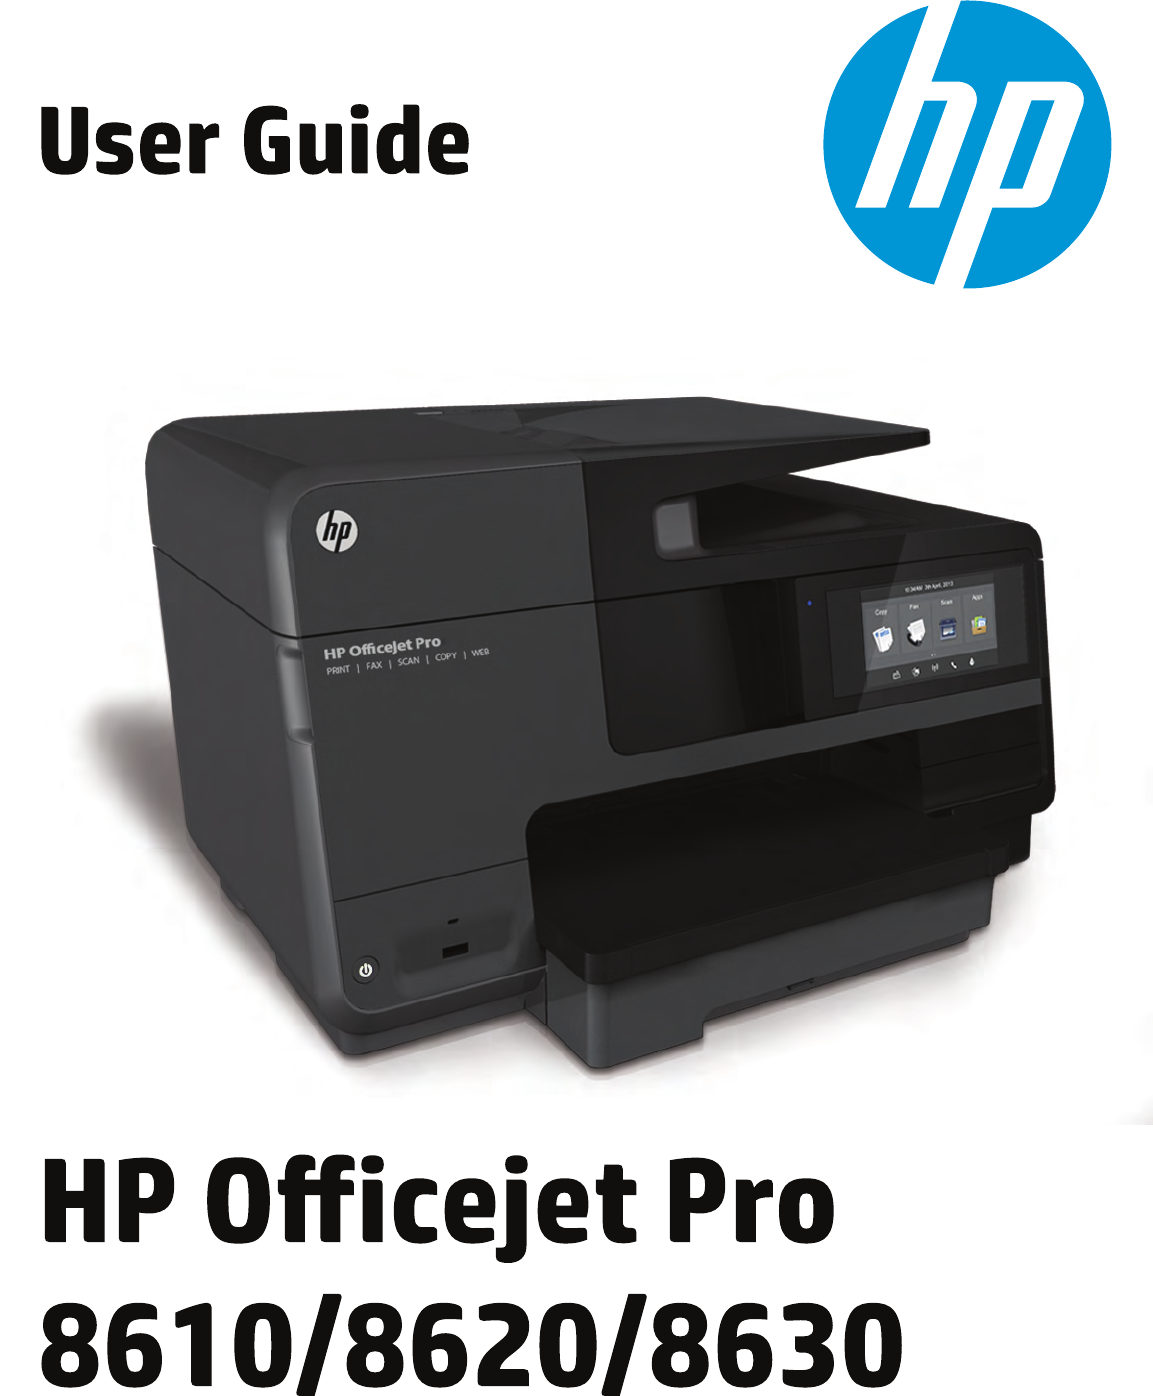 hp officejet pro 8610 printer software